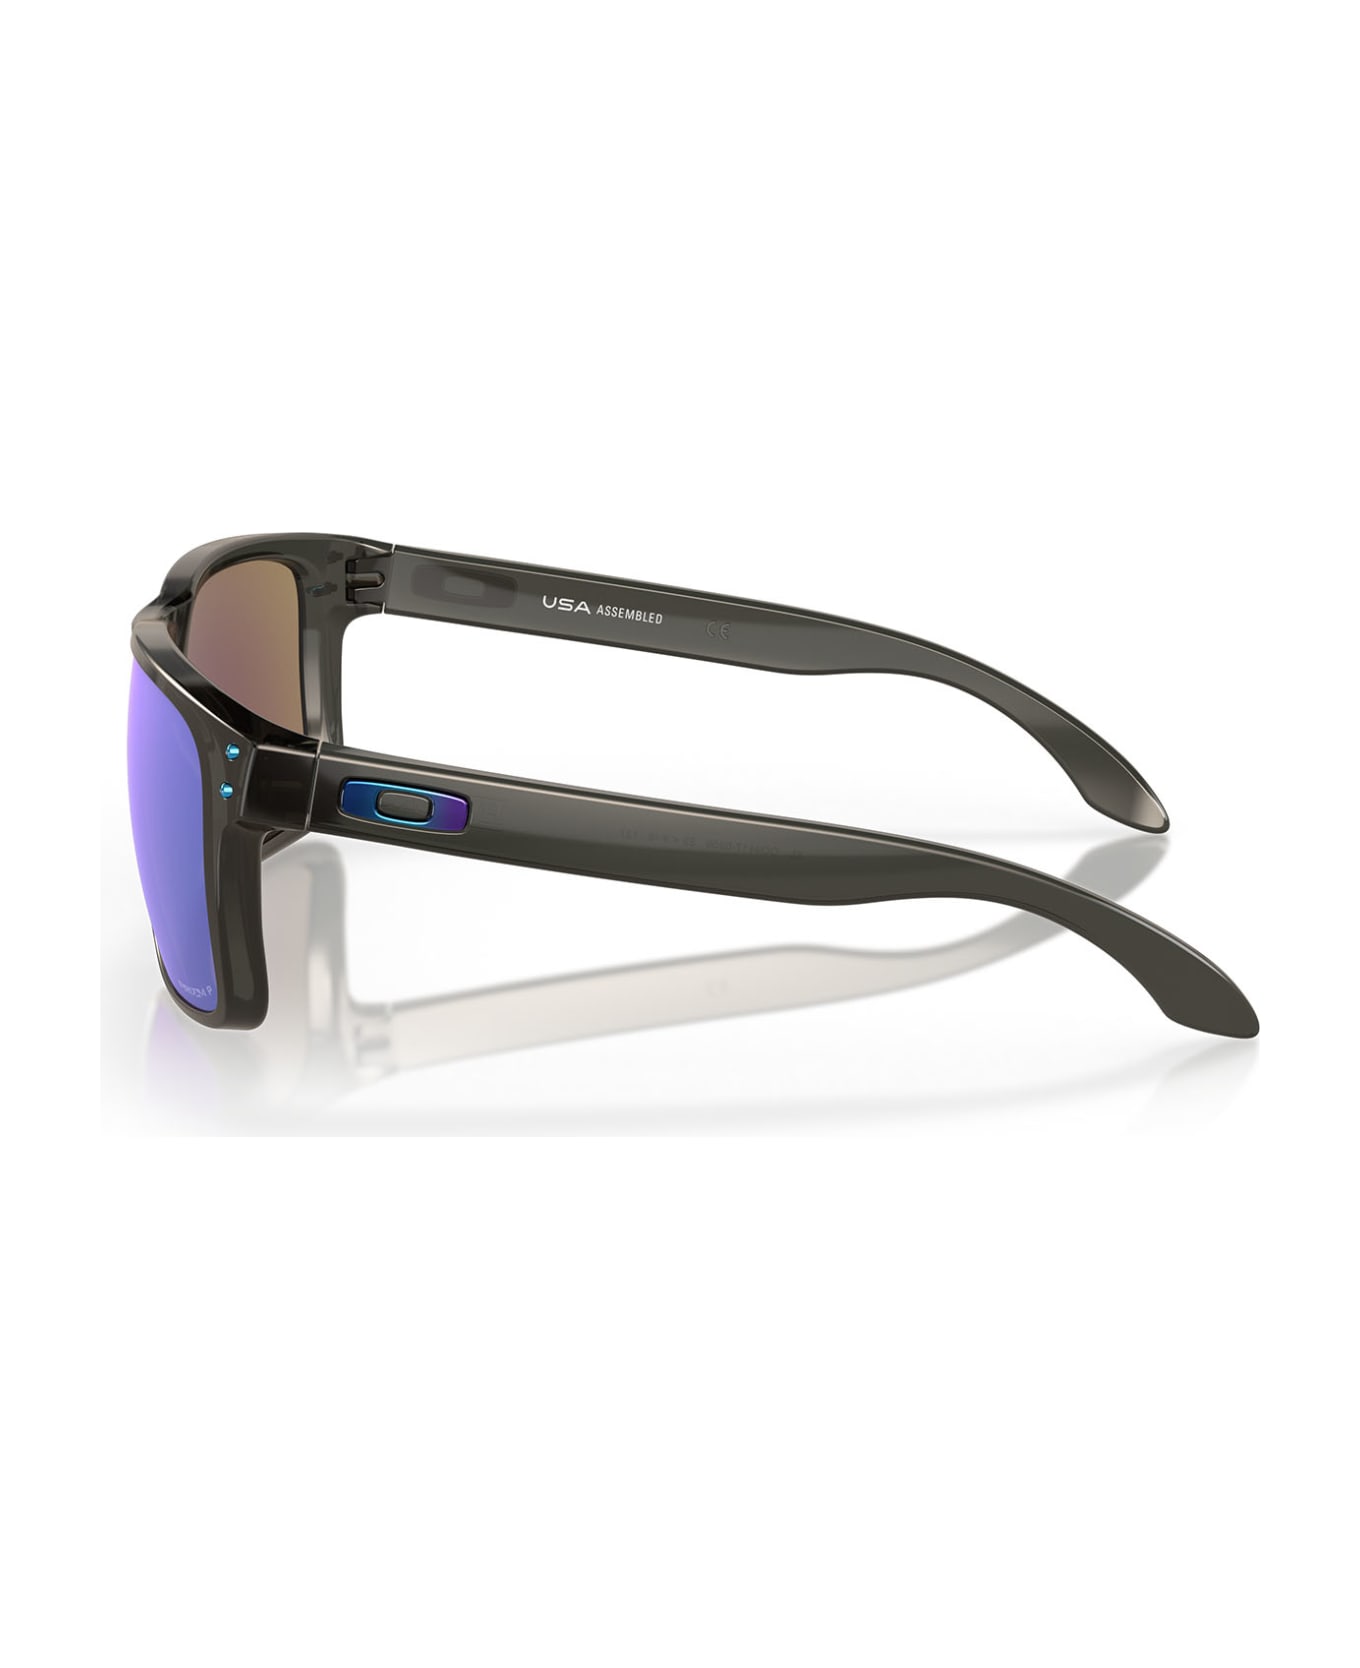 Oakley Oo9417 Grey Smoke Sunglasses - Grey Smoke